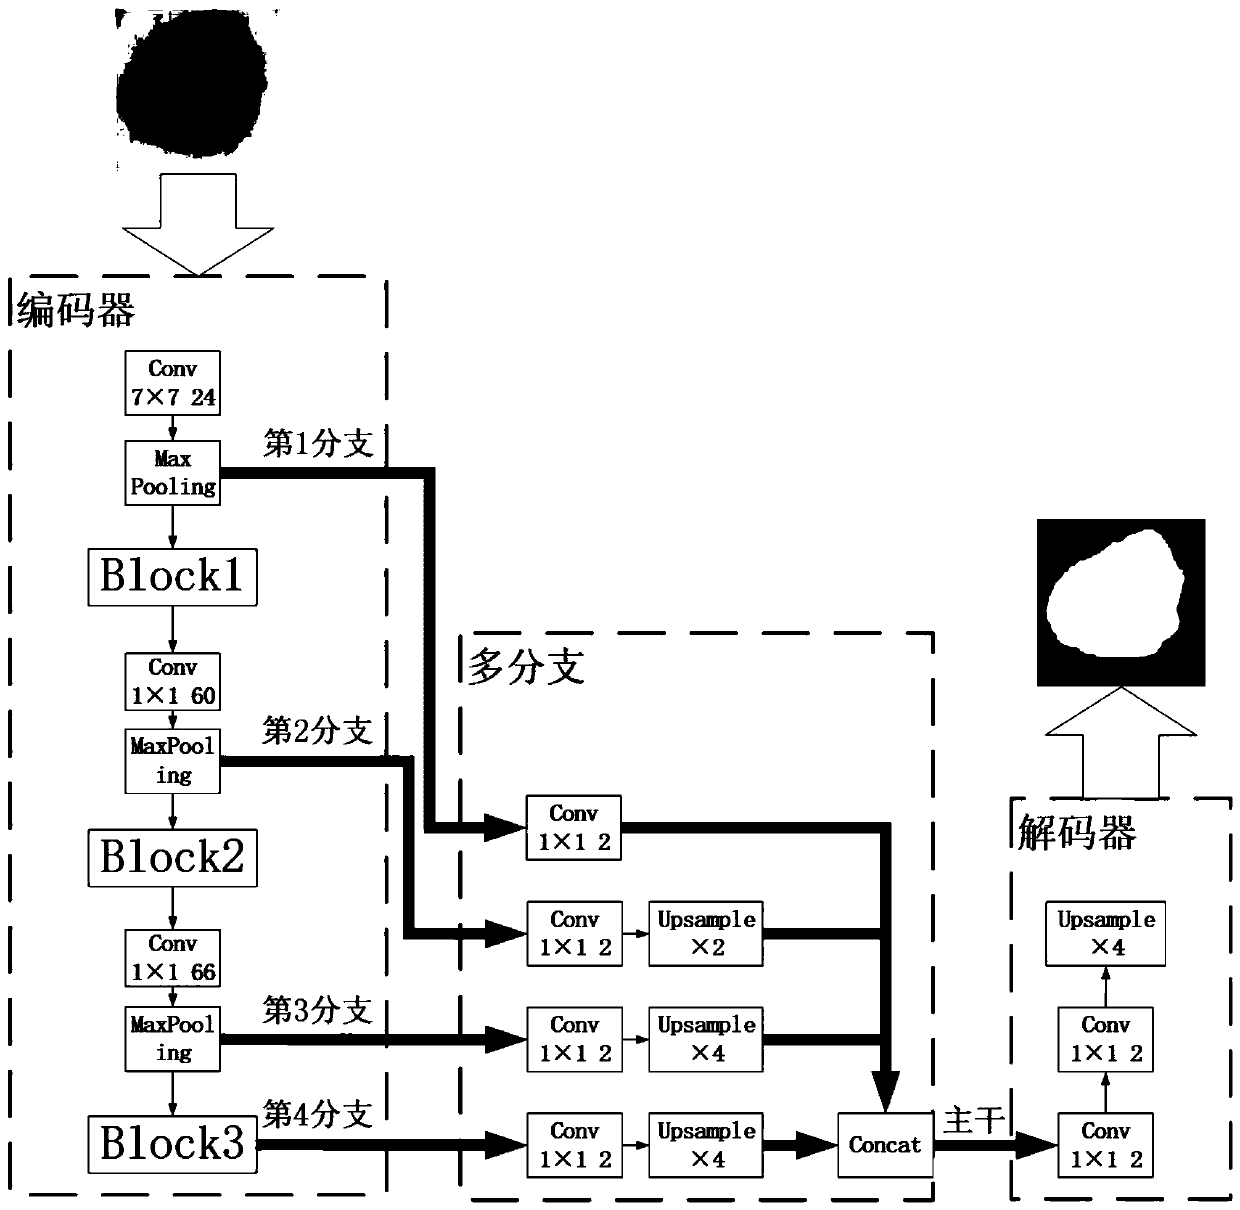 A dermatoscope image segmentation method based on a multi-branch convolutional neural network